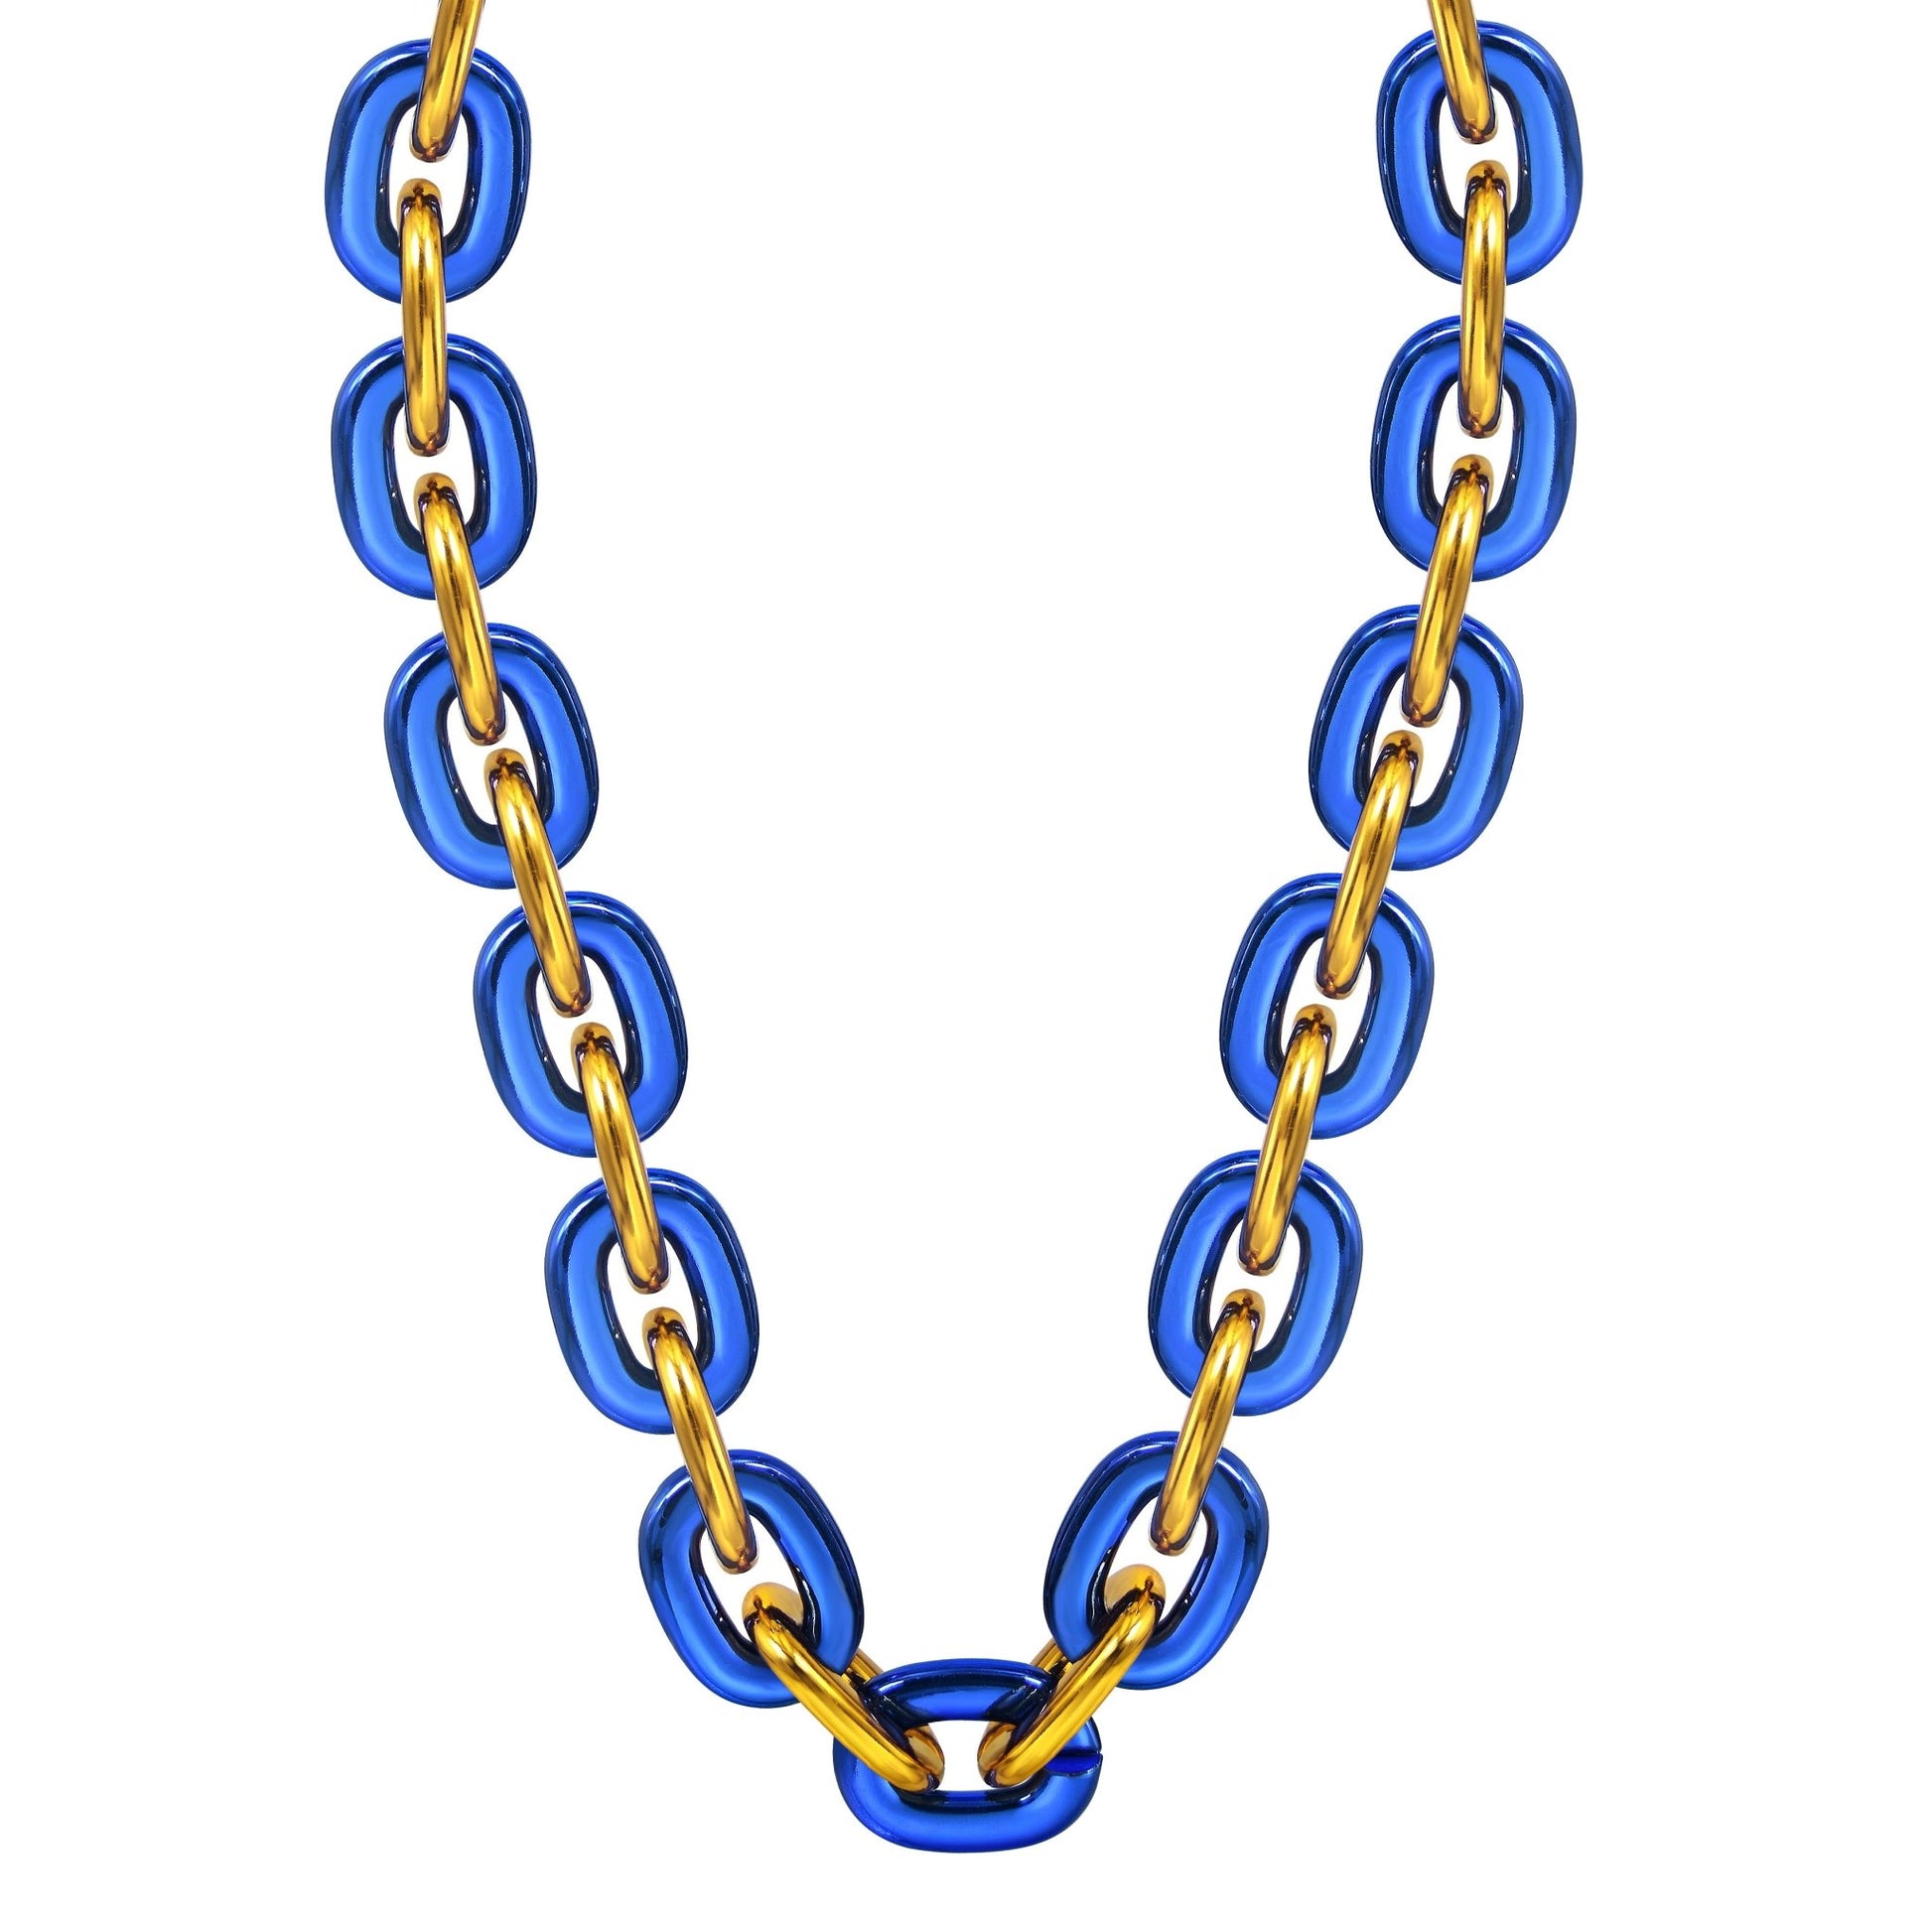 Jumbo Fan Chain Necklace - Gamedays Gear - Royal Blue / Gold